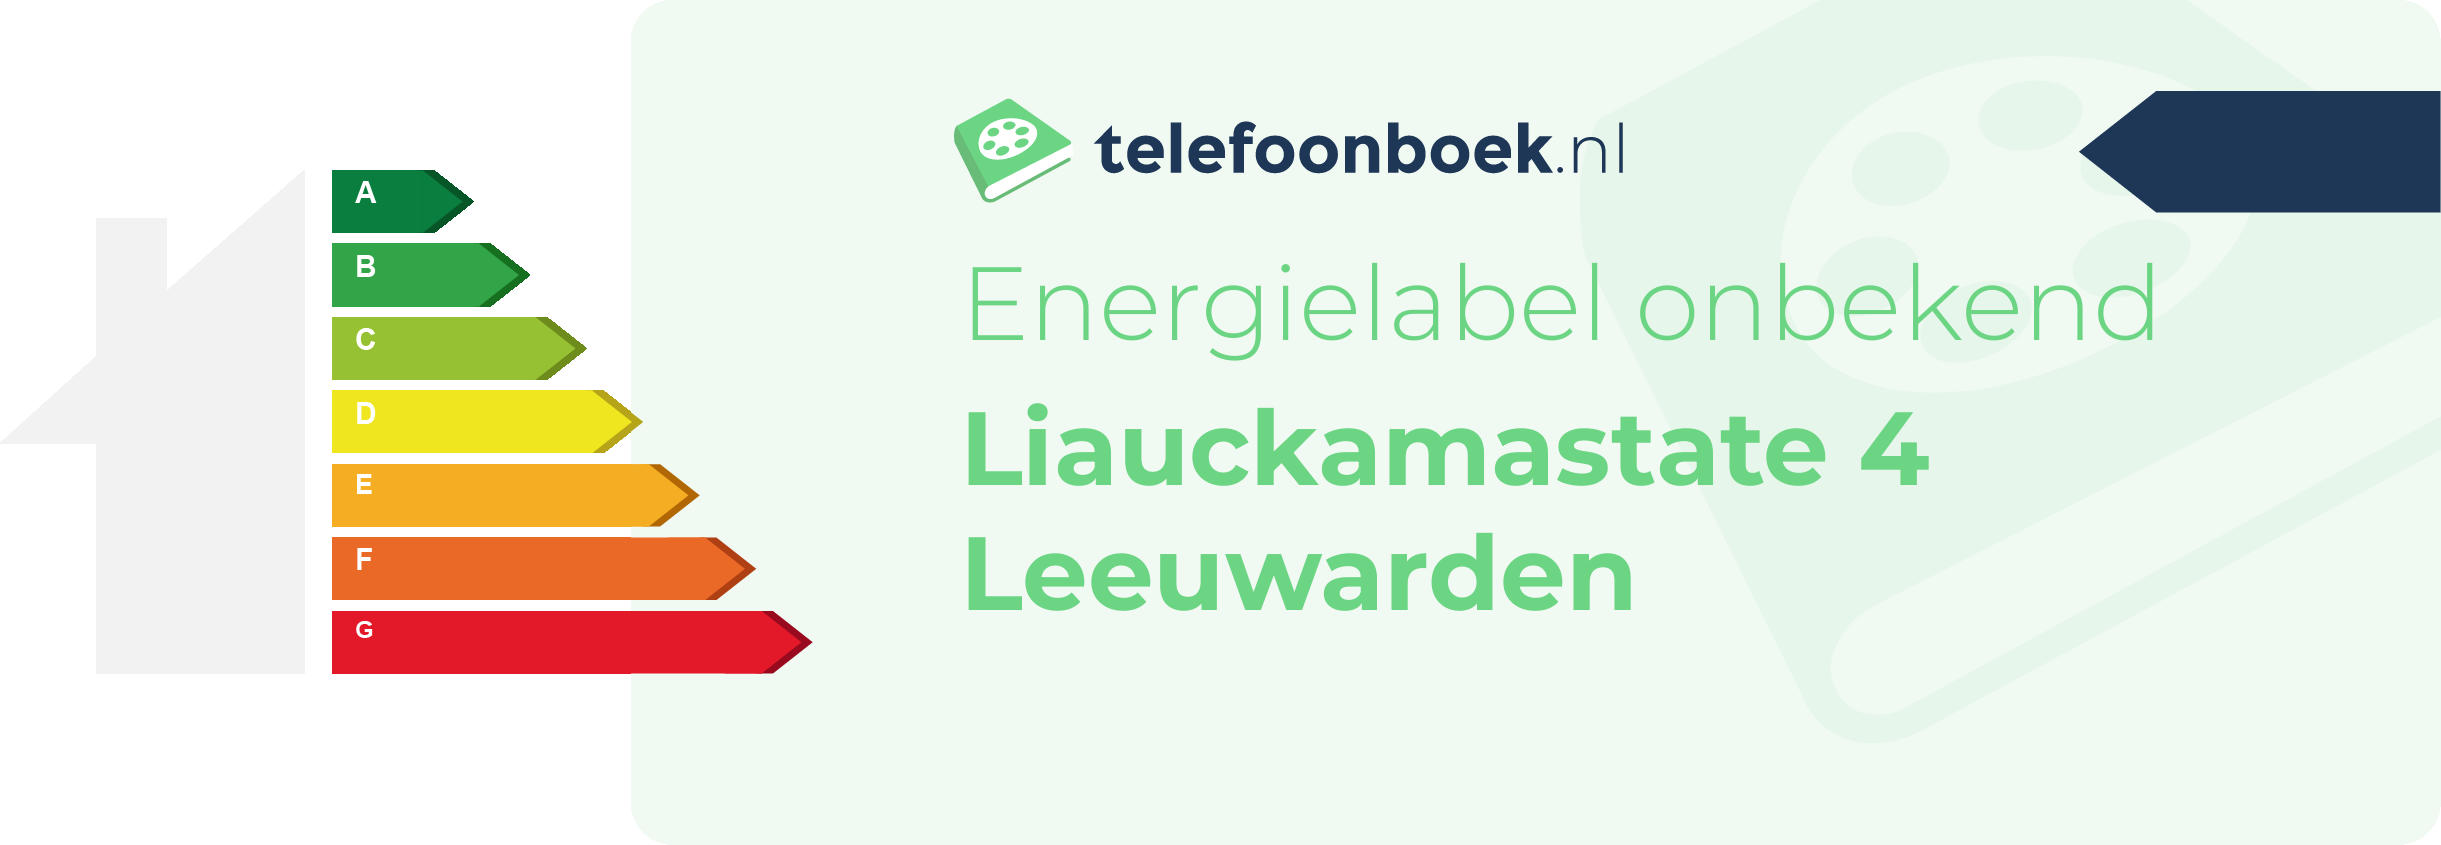 Energielabel Liauckamastate 4 Leeuwarden